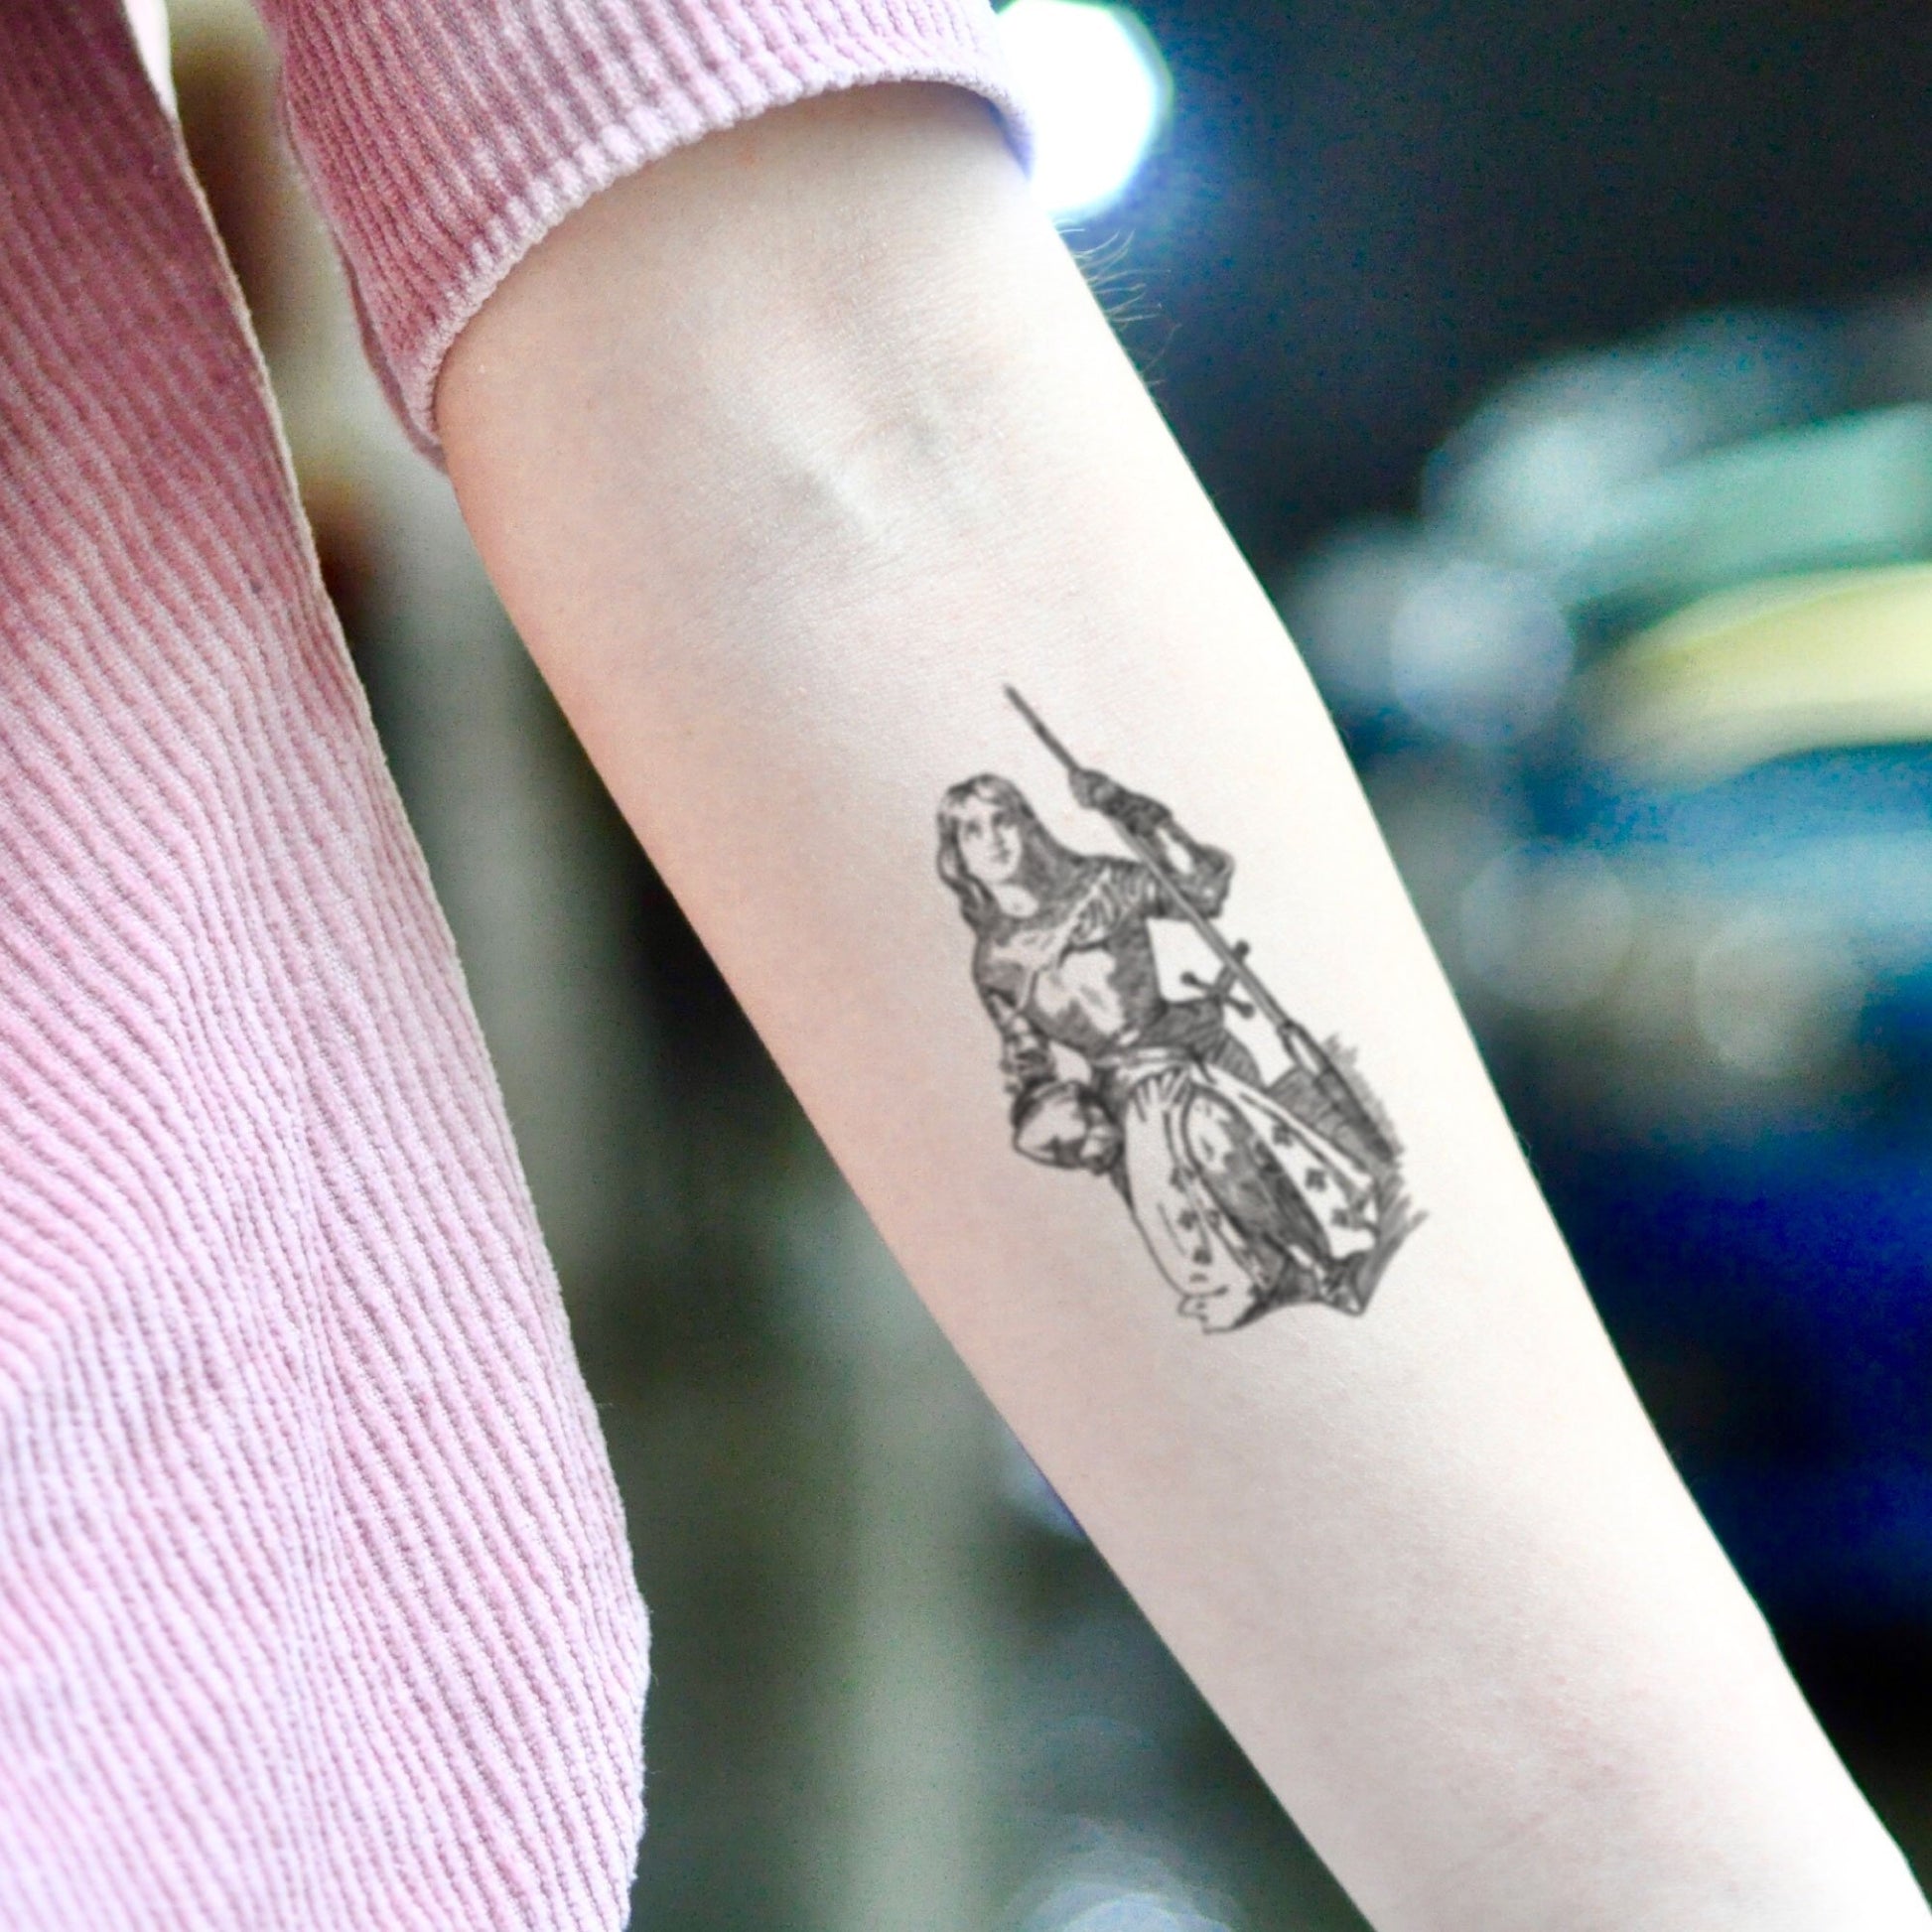 fake small joan of arc illustrative temporary tattoo sticker design idea on inner arm